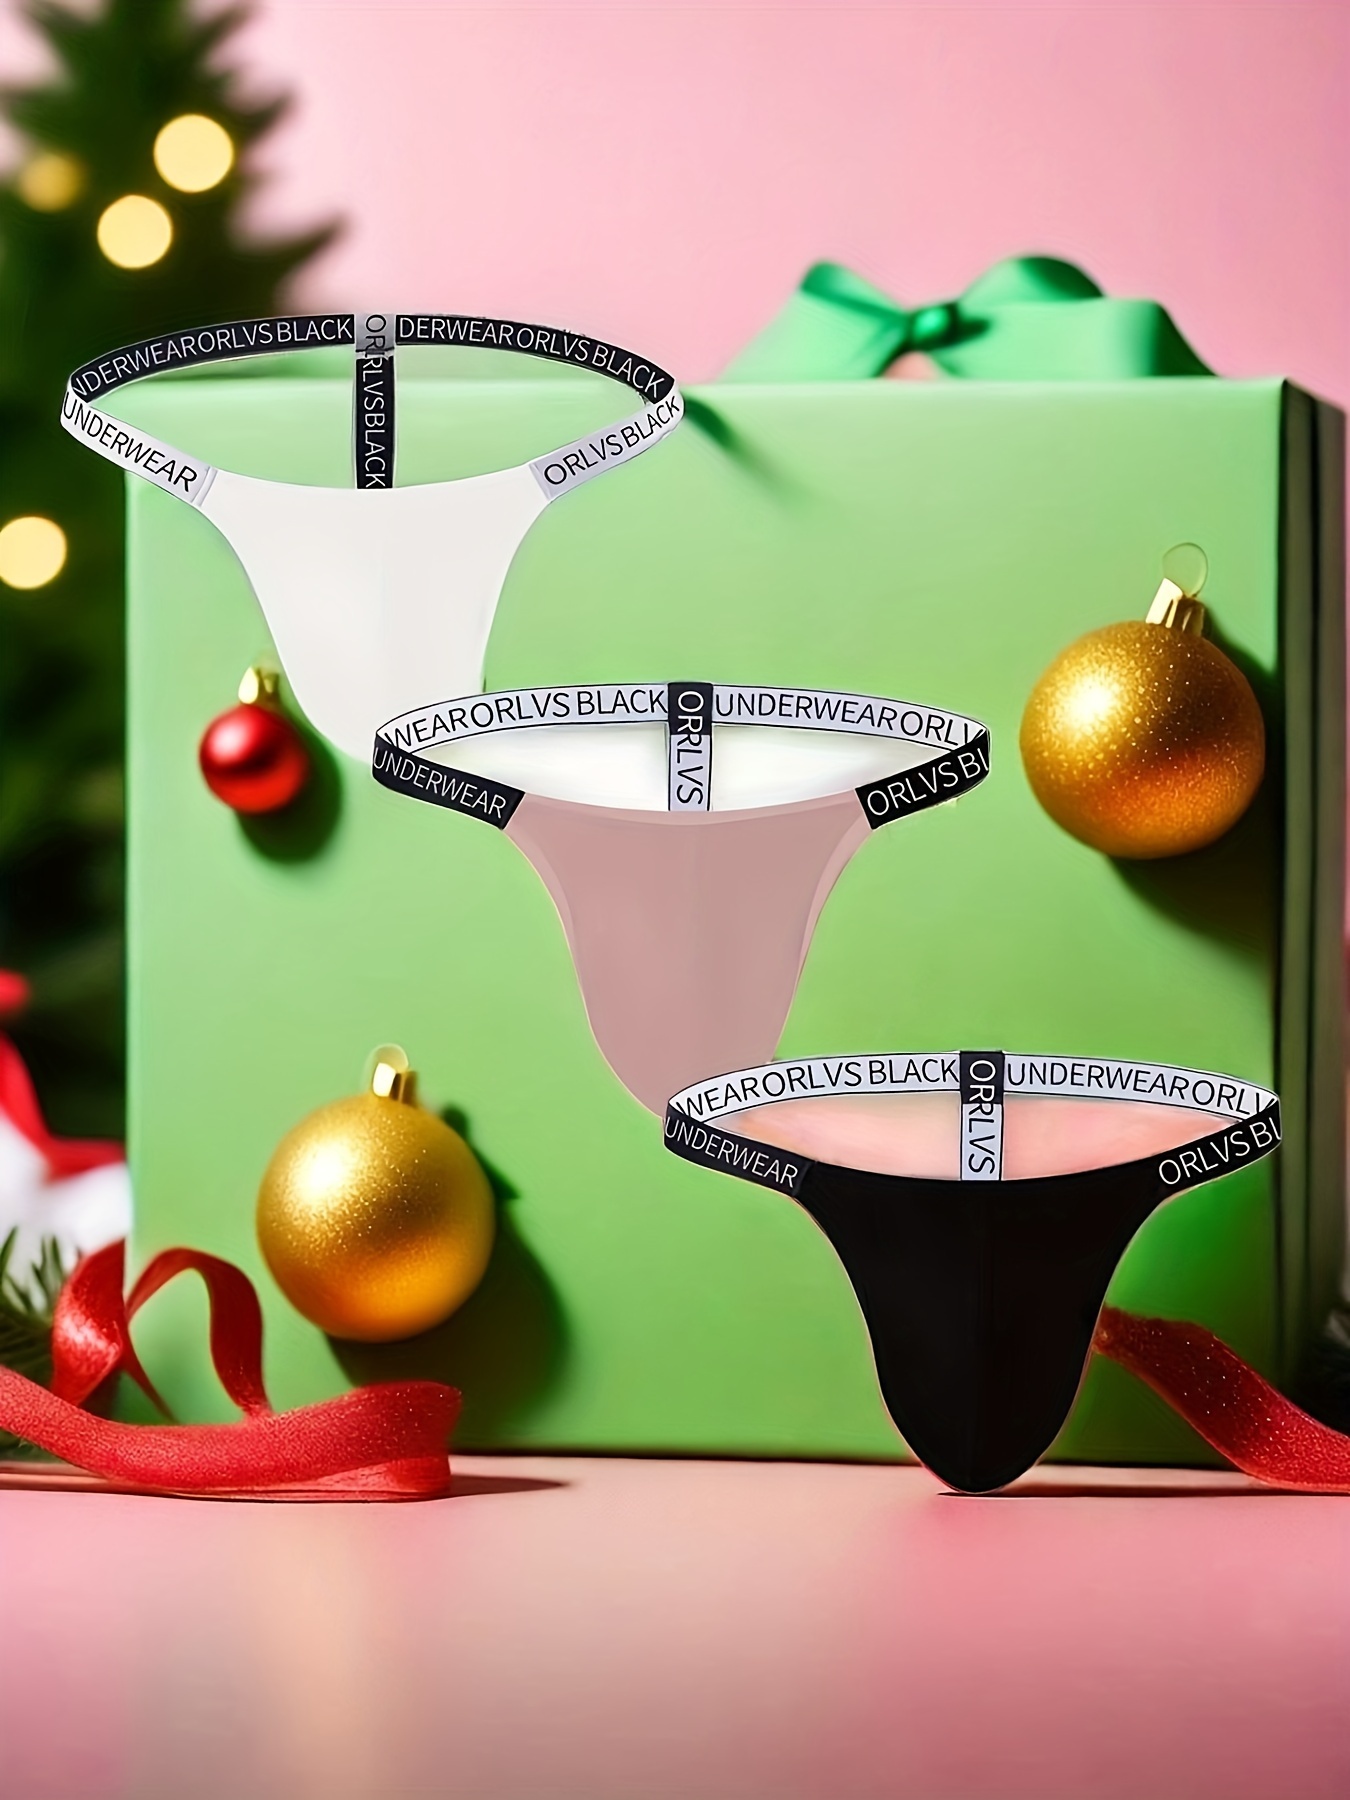 Men Christmas Reindeer Elk Men Pouch G-Strings Thong Underwear T-Back  Erotic Underwear Briefs